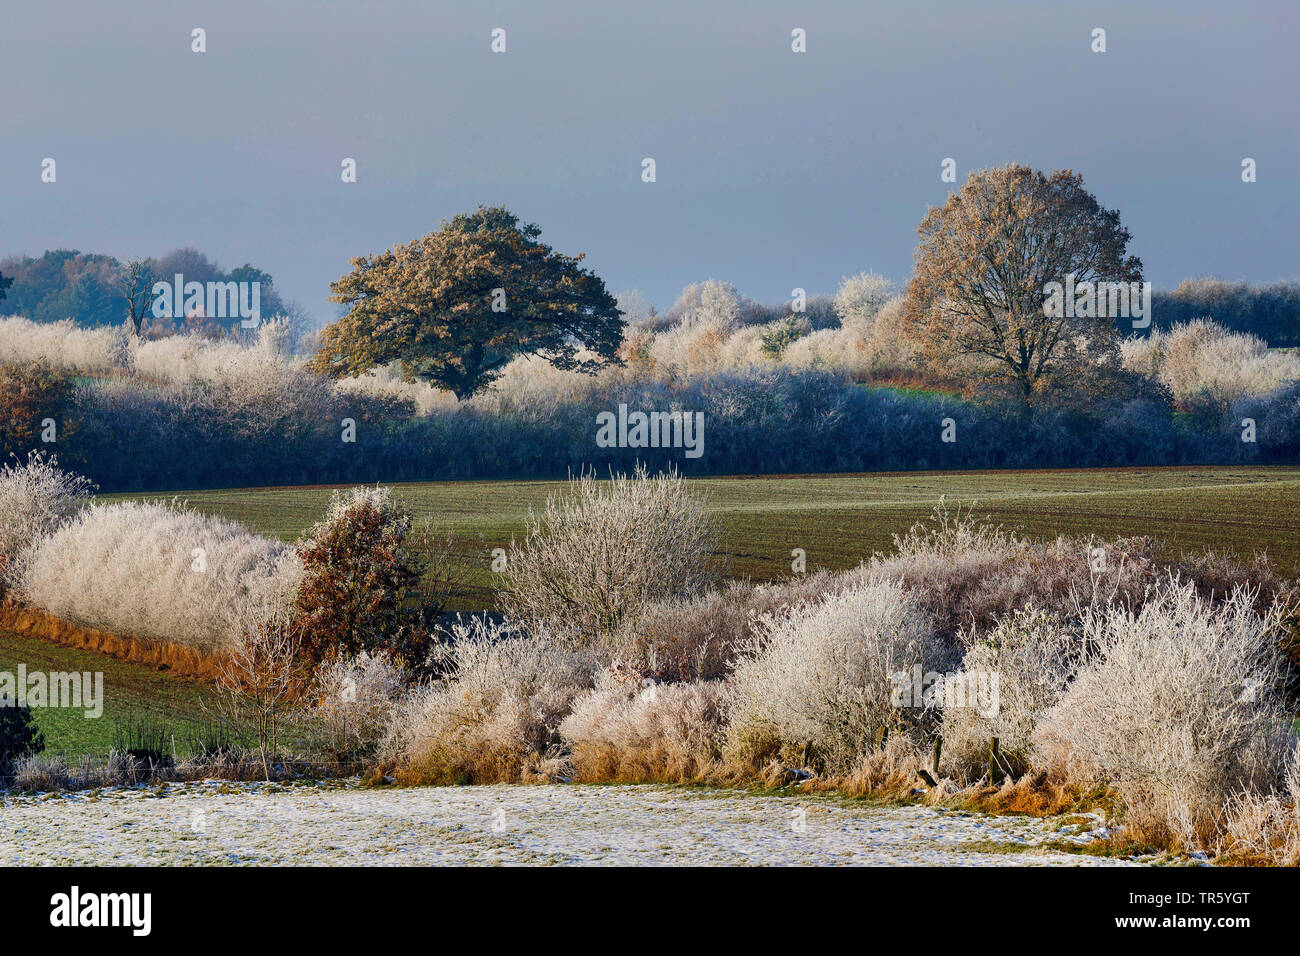 snowy hedges bank landscape, Germany, Schleswig-Holstein Stock Photo